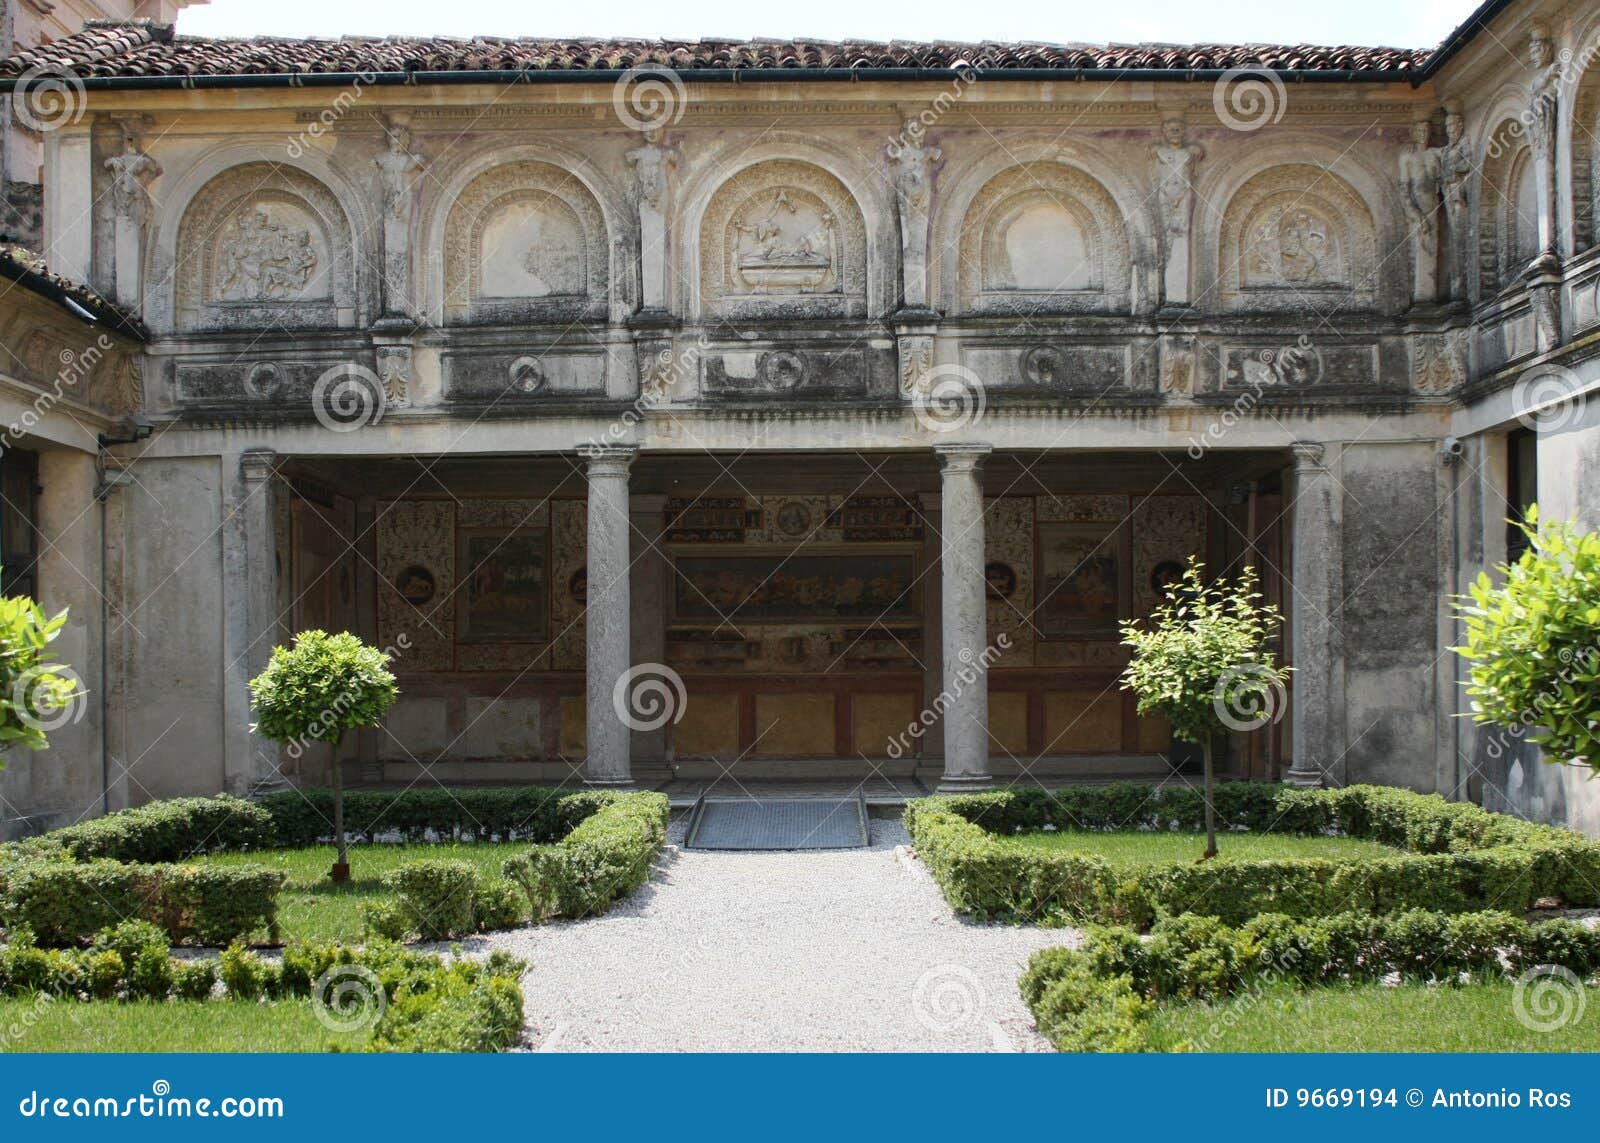 palazzo te, mantova (italy); the secret garden